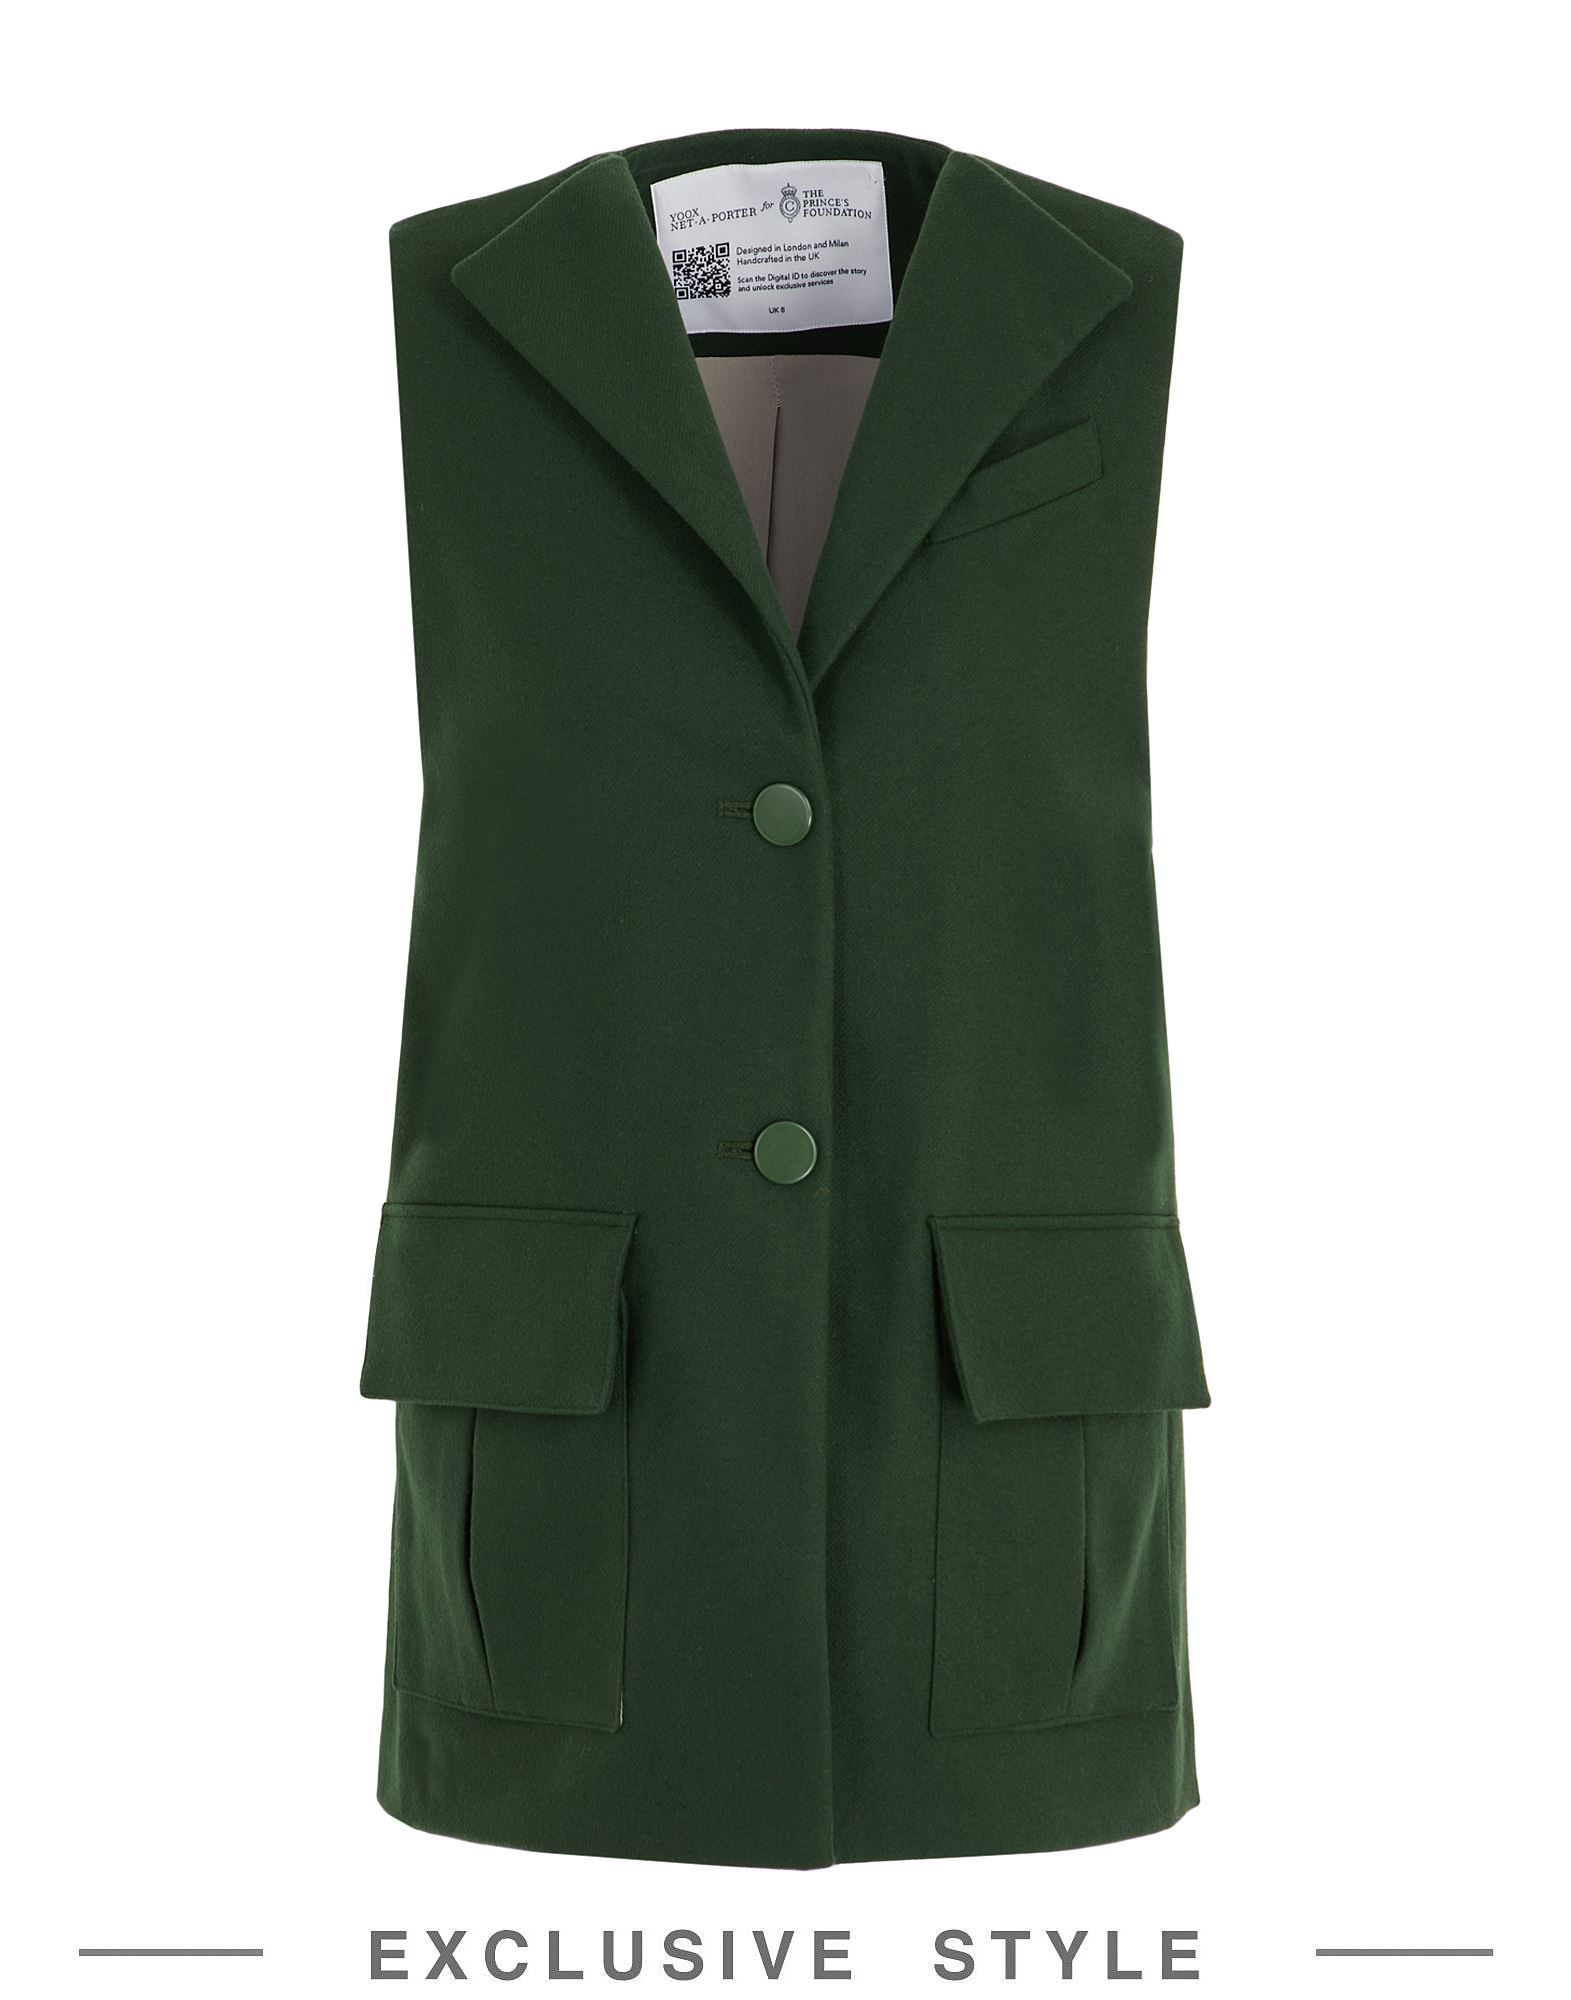 Yoox Net-a-porter For The Prince's Foundation Woman Blazer Dark Green Size 16 Virgin Wool